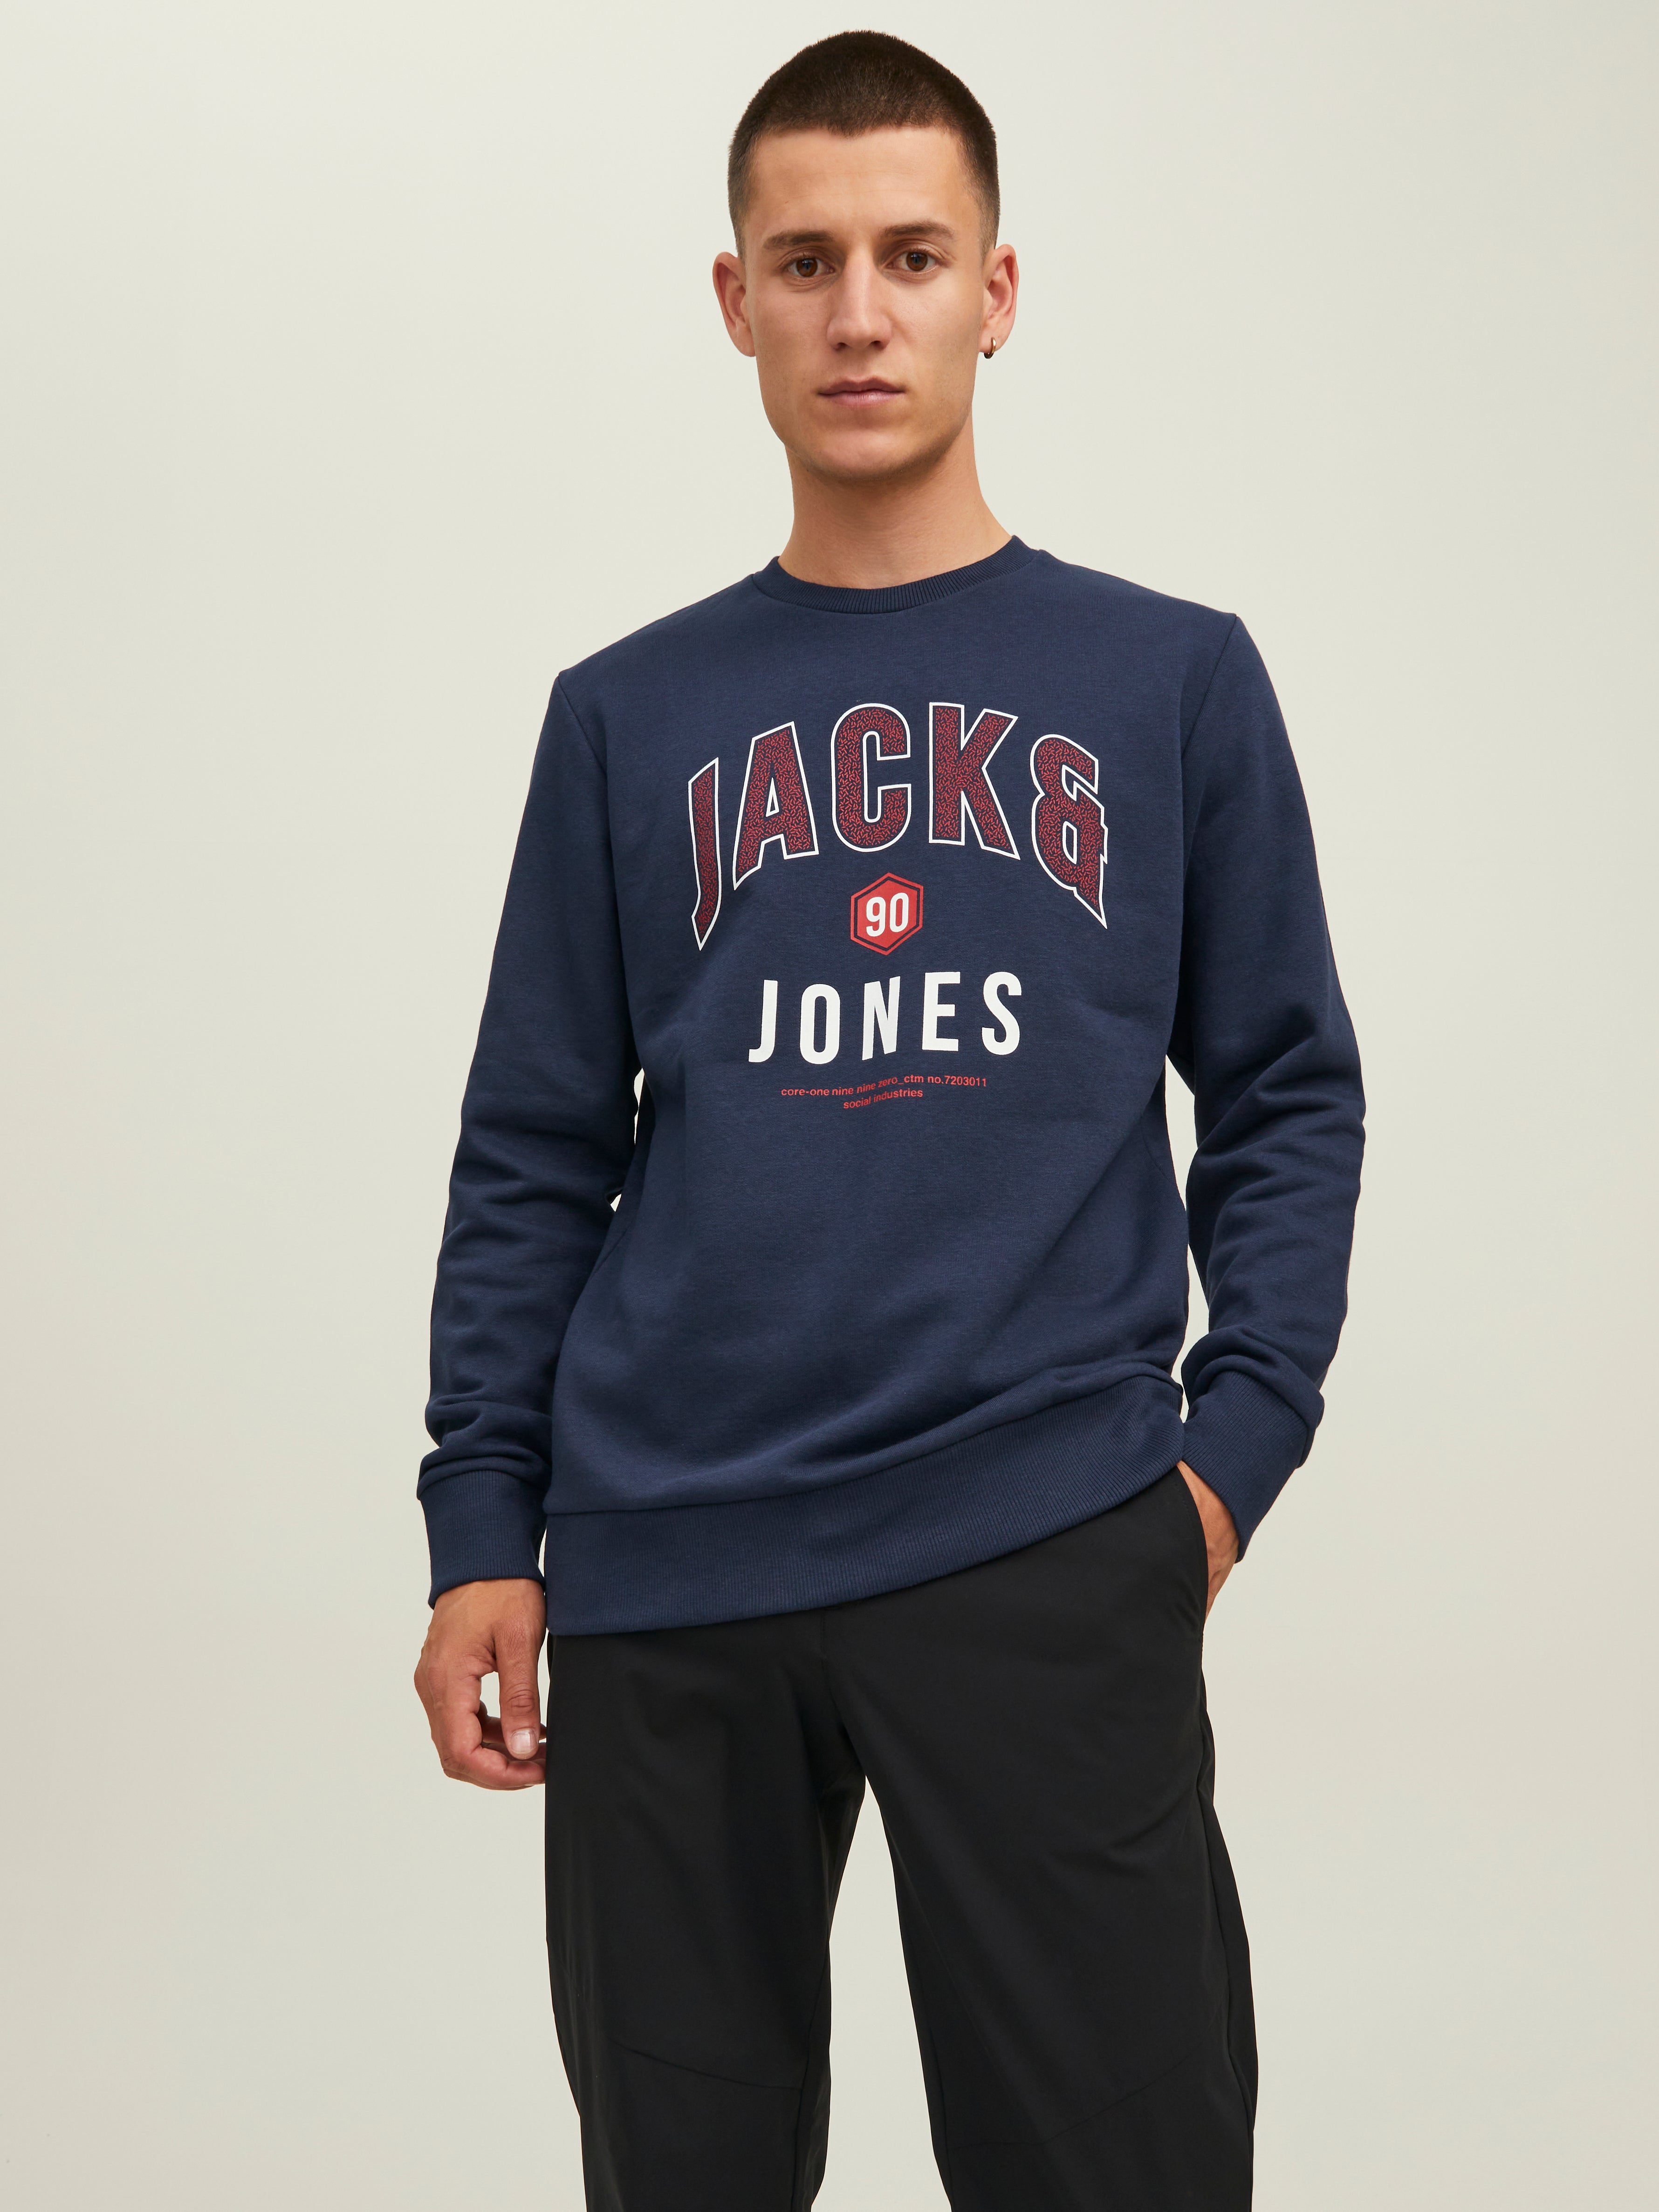 Jack & Jones jumper Navy Blue XL MEN FASHION Jumpers & Sweatshirts Knitted discount 56% 